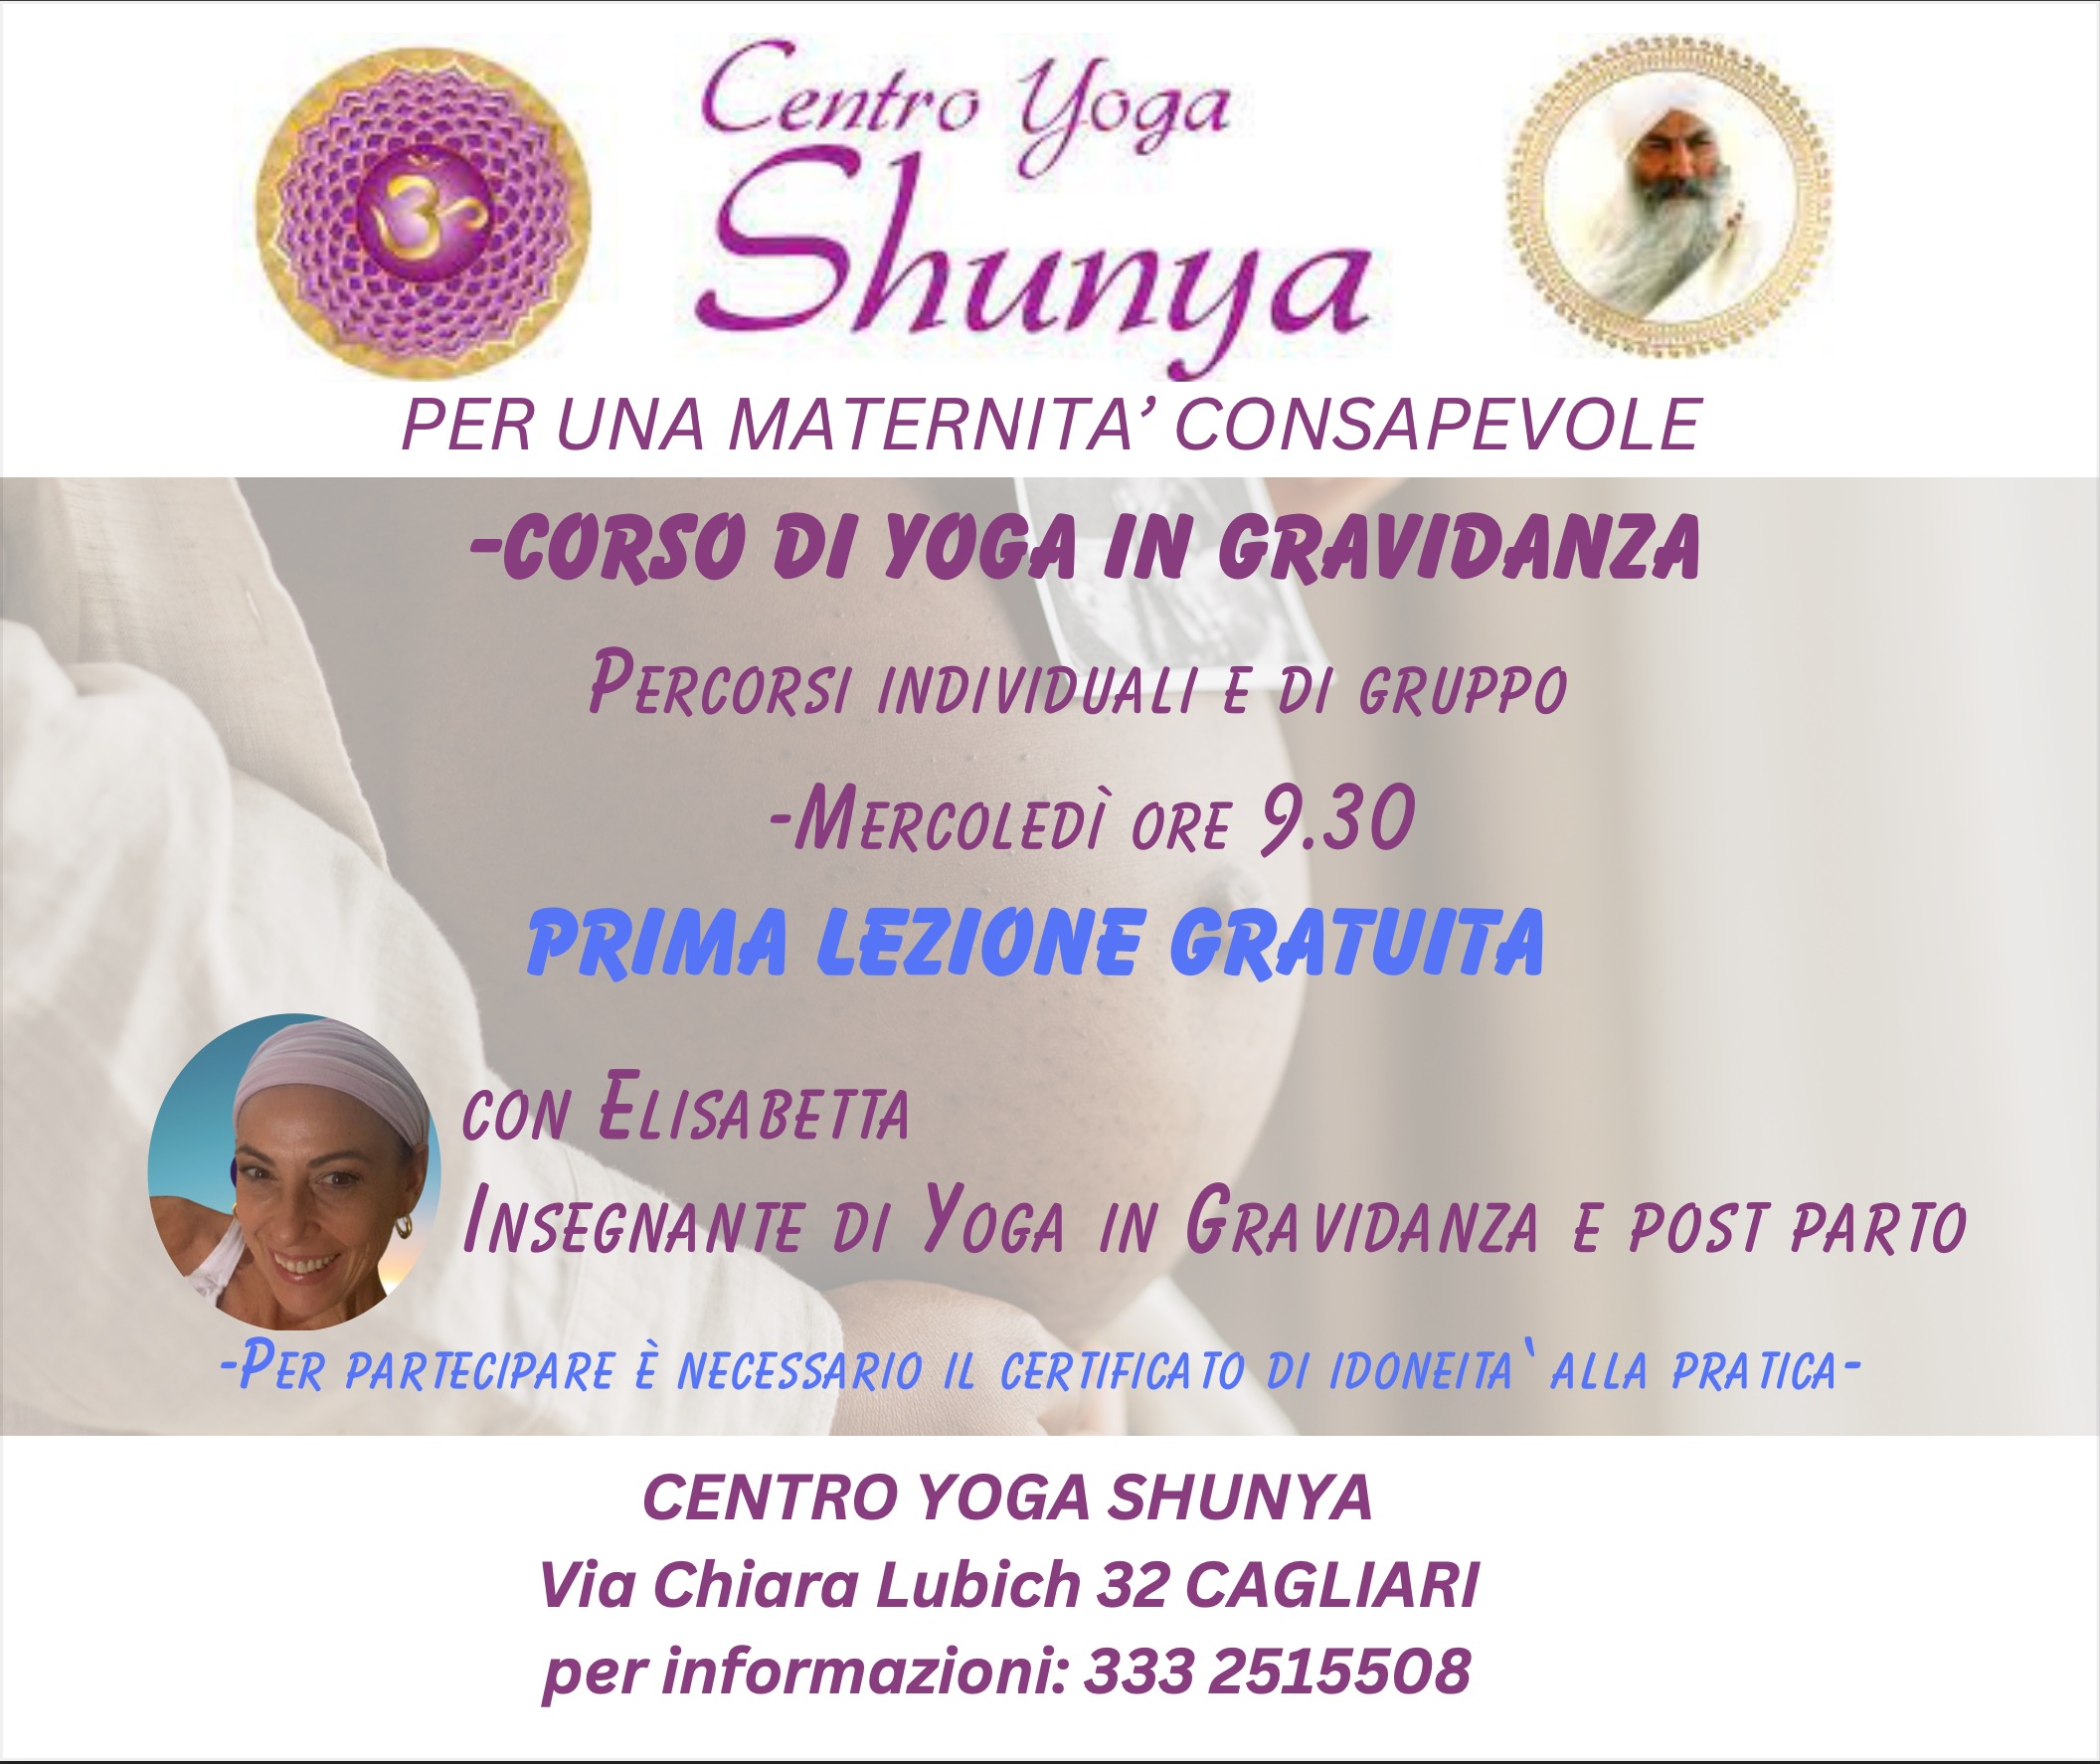 Corso Yoga in Gravidanza @ Centro Yoga Shunya